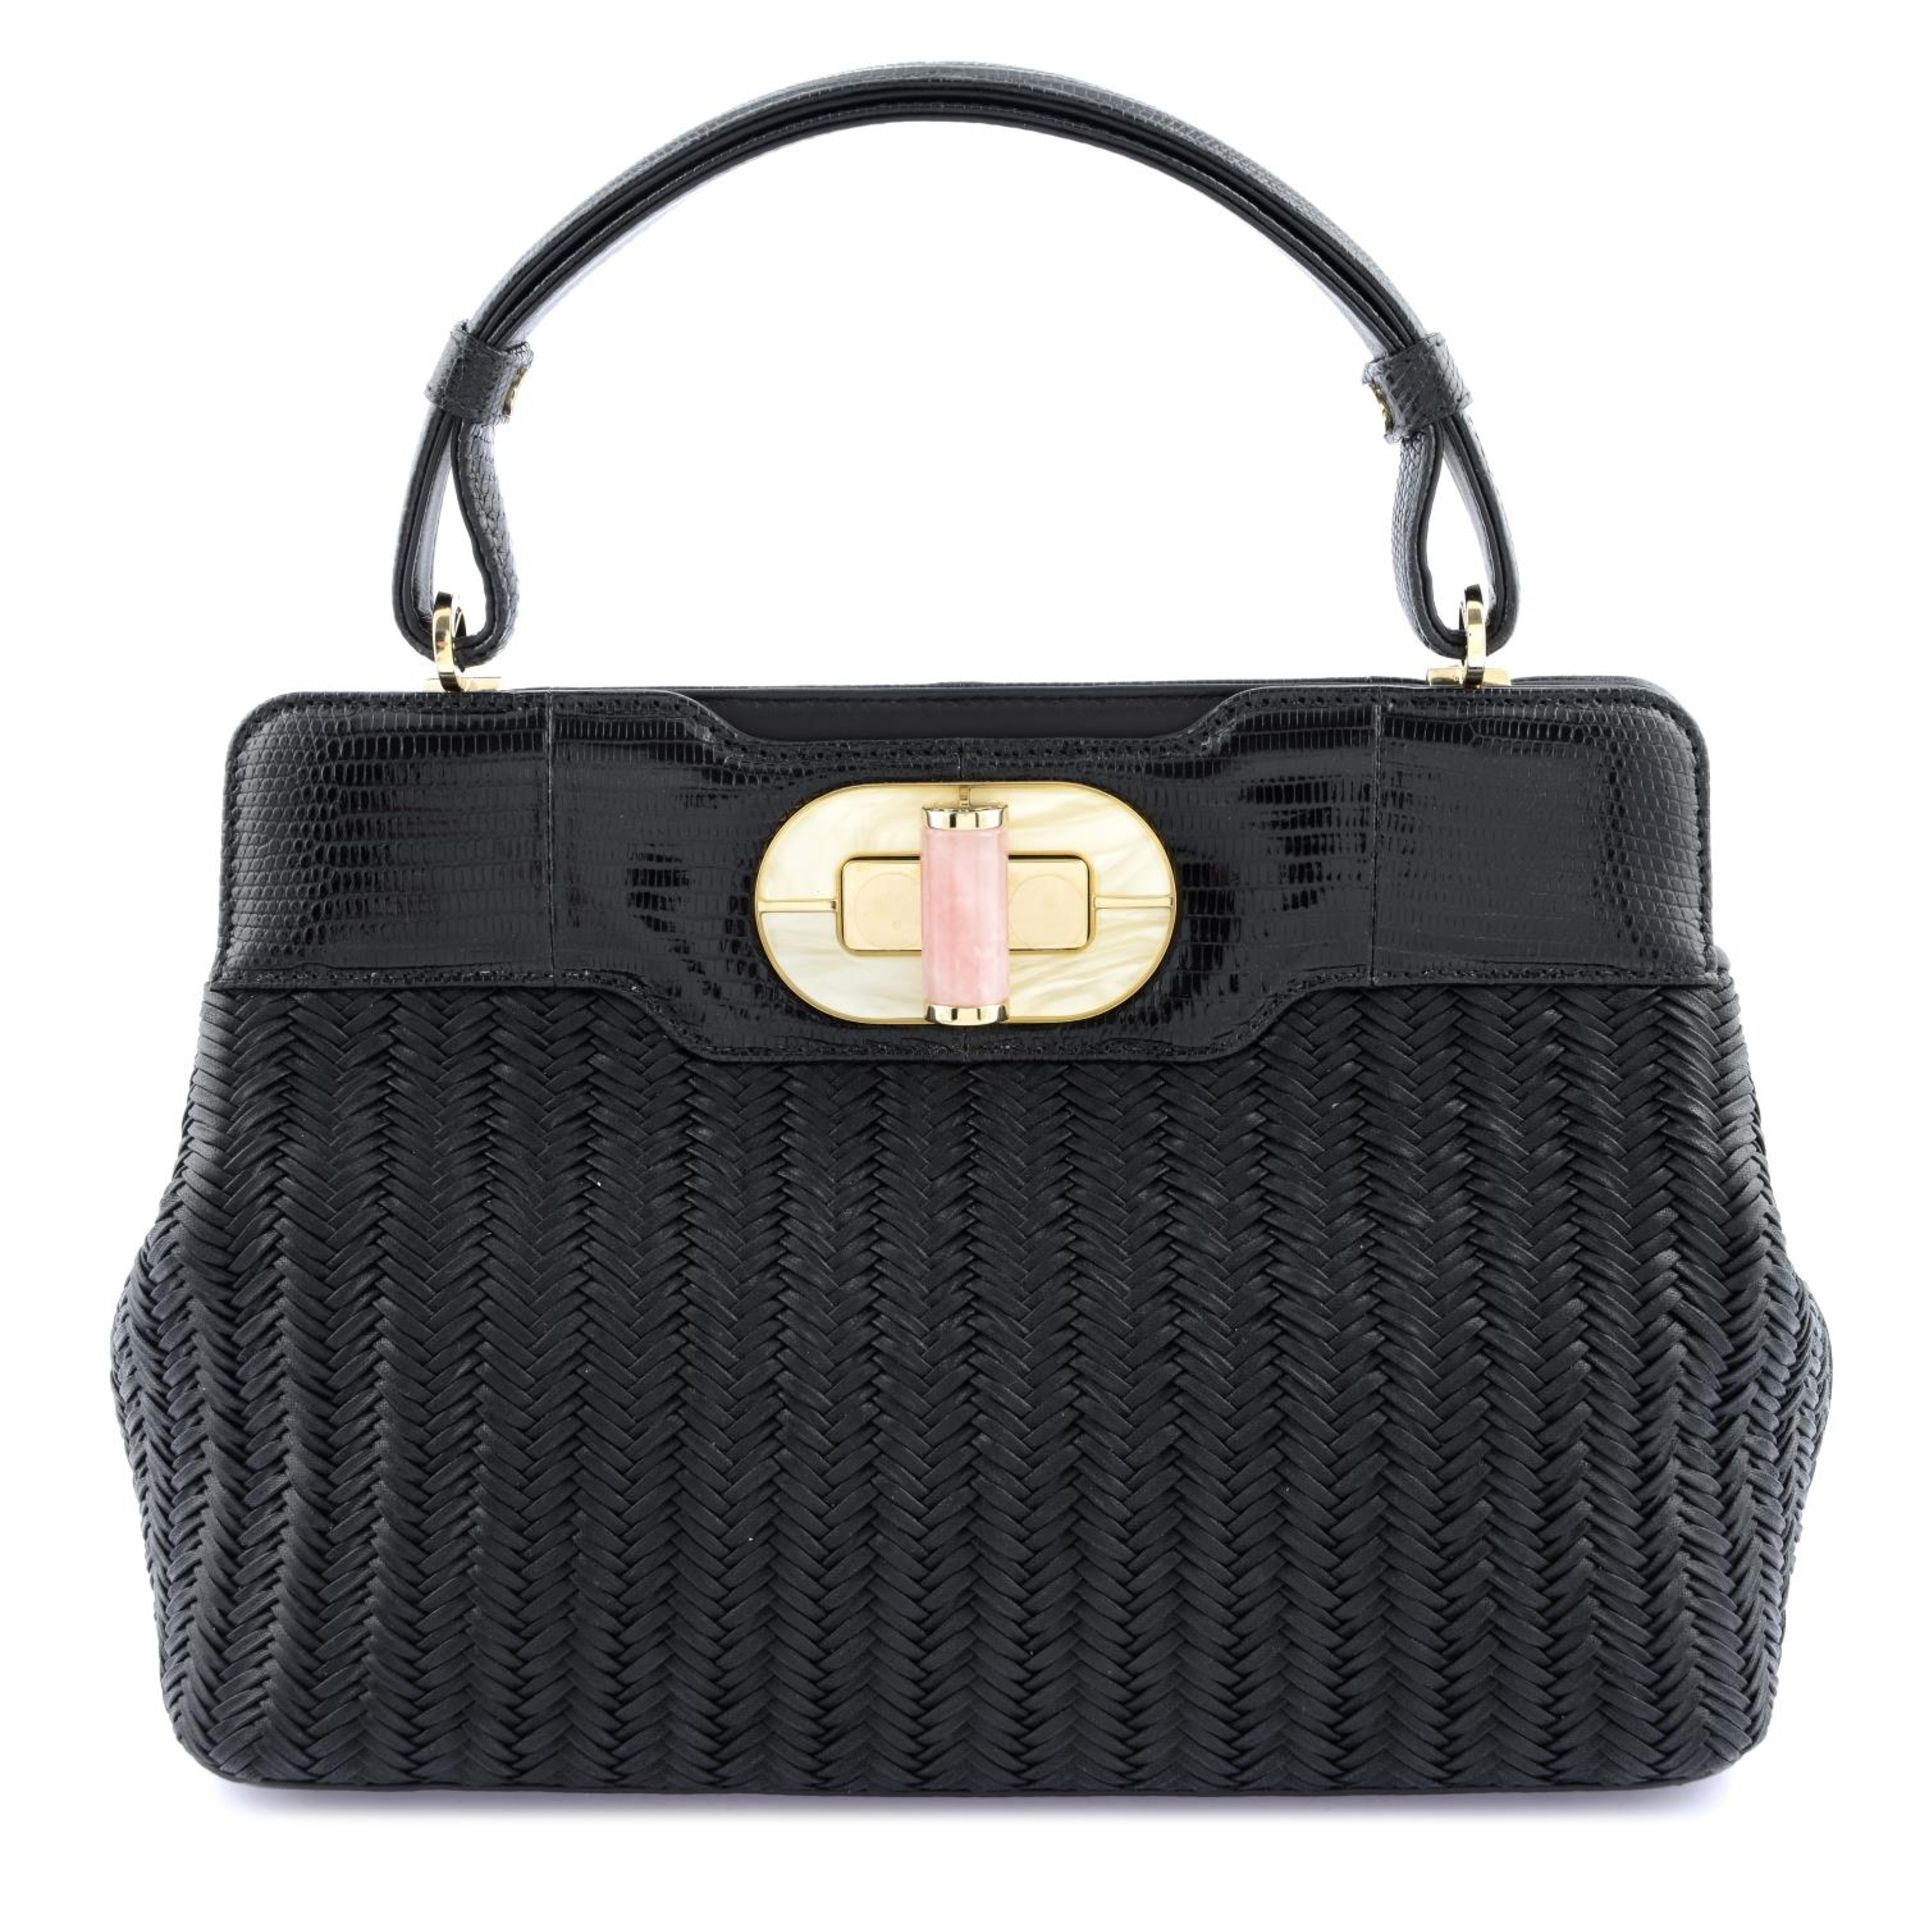 BULGARI - a woven leather Isabella Rossellini handbag.